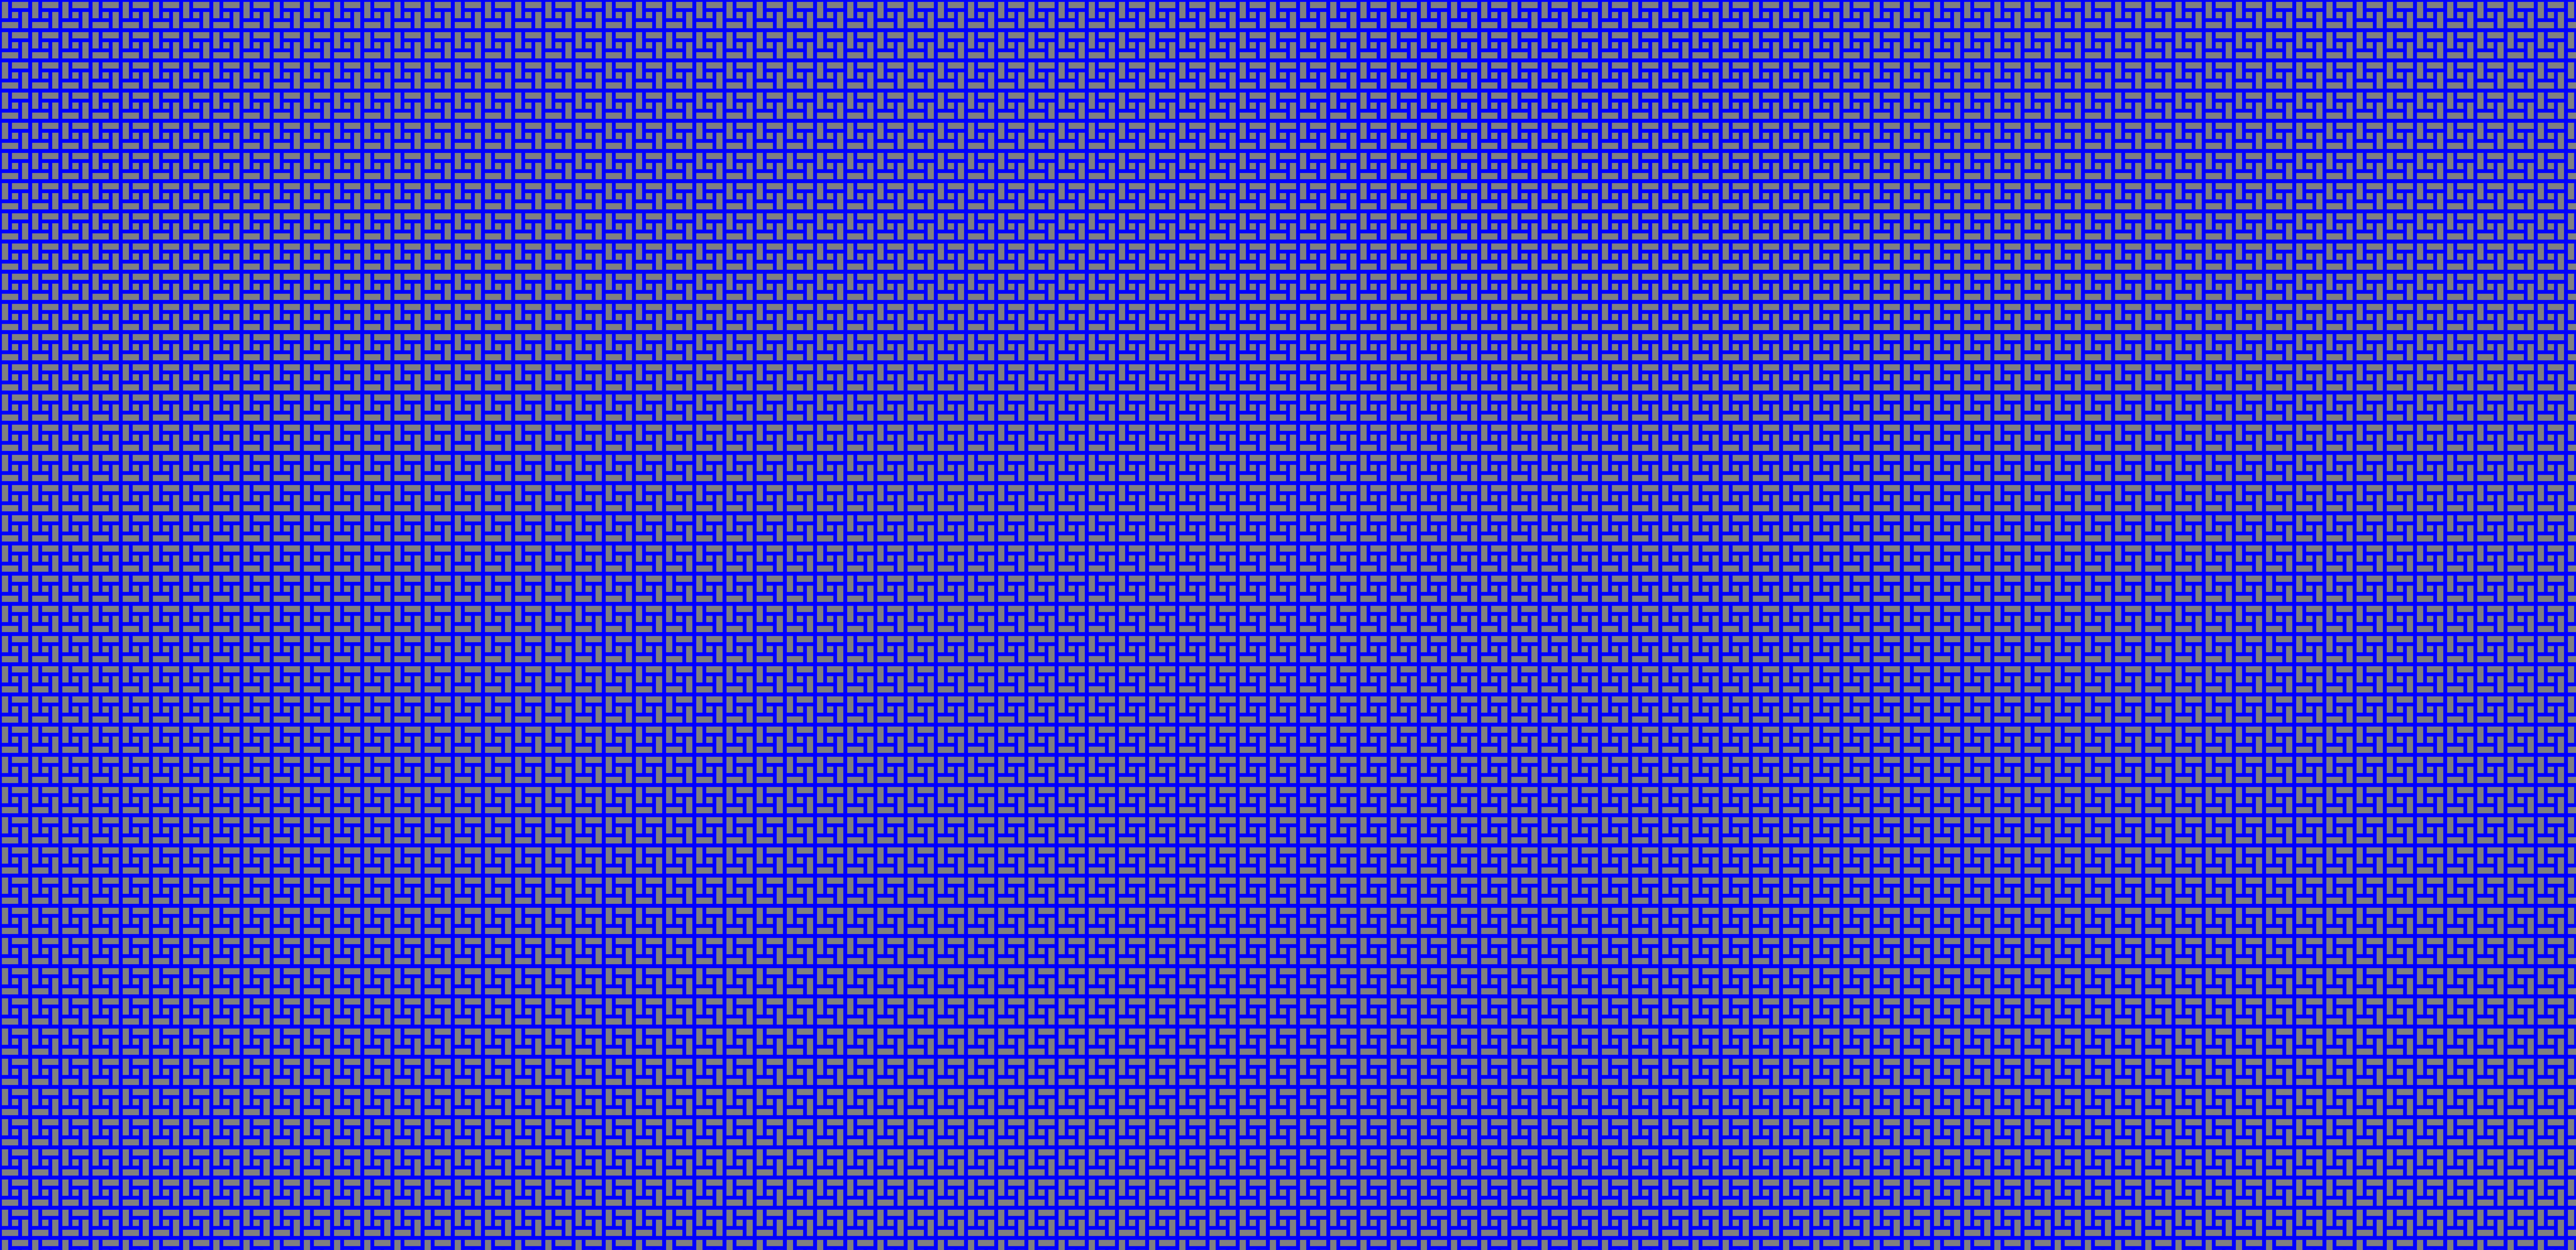 General 10240x4968 minimalism simple background tiles